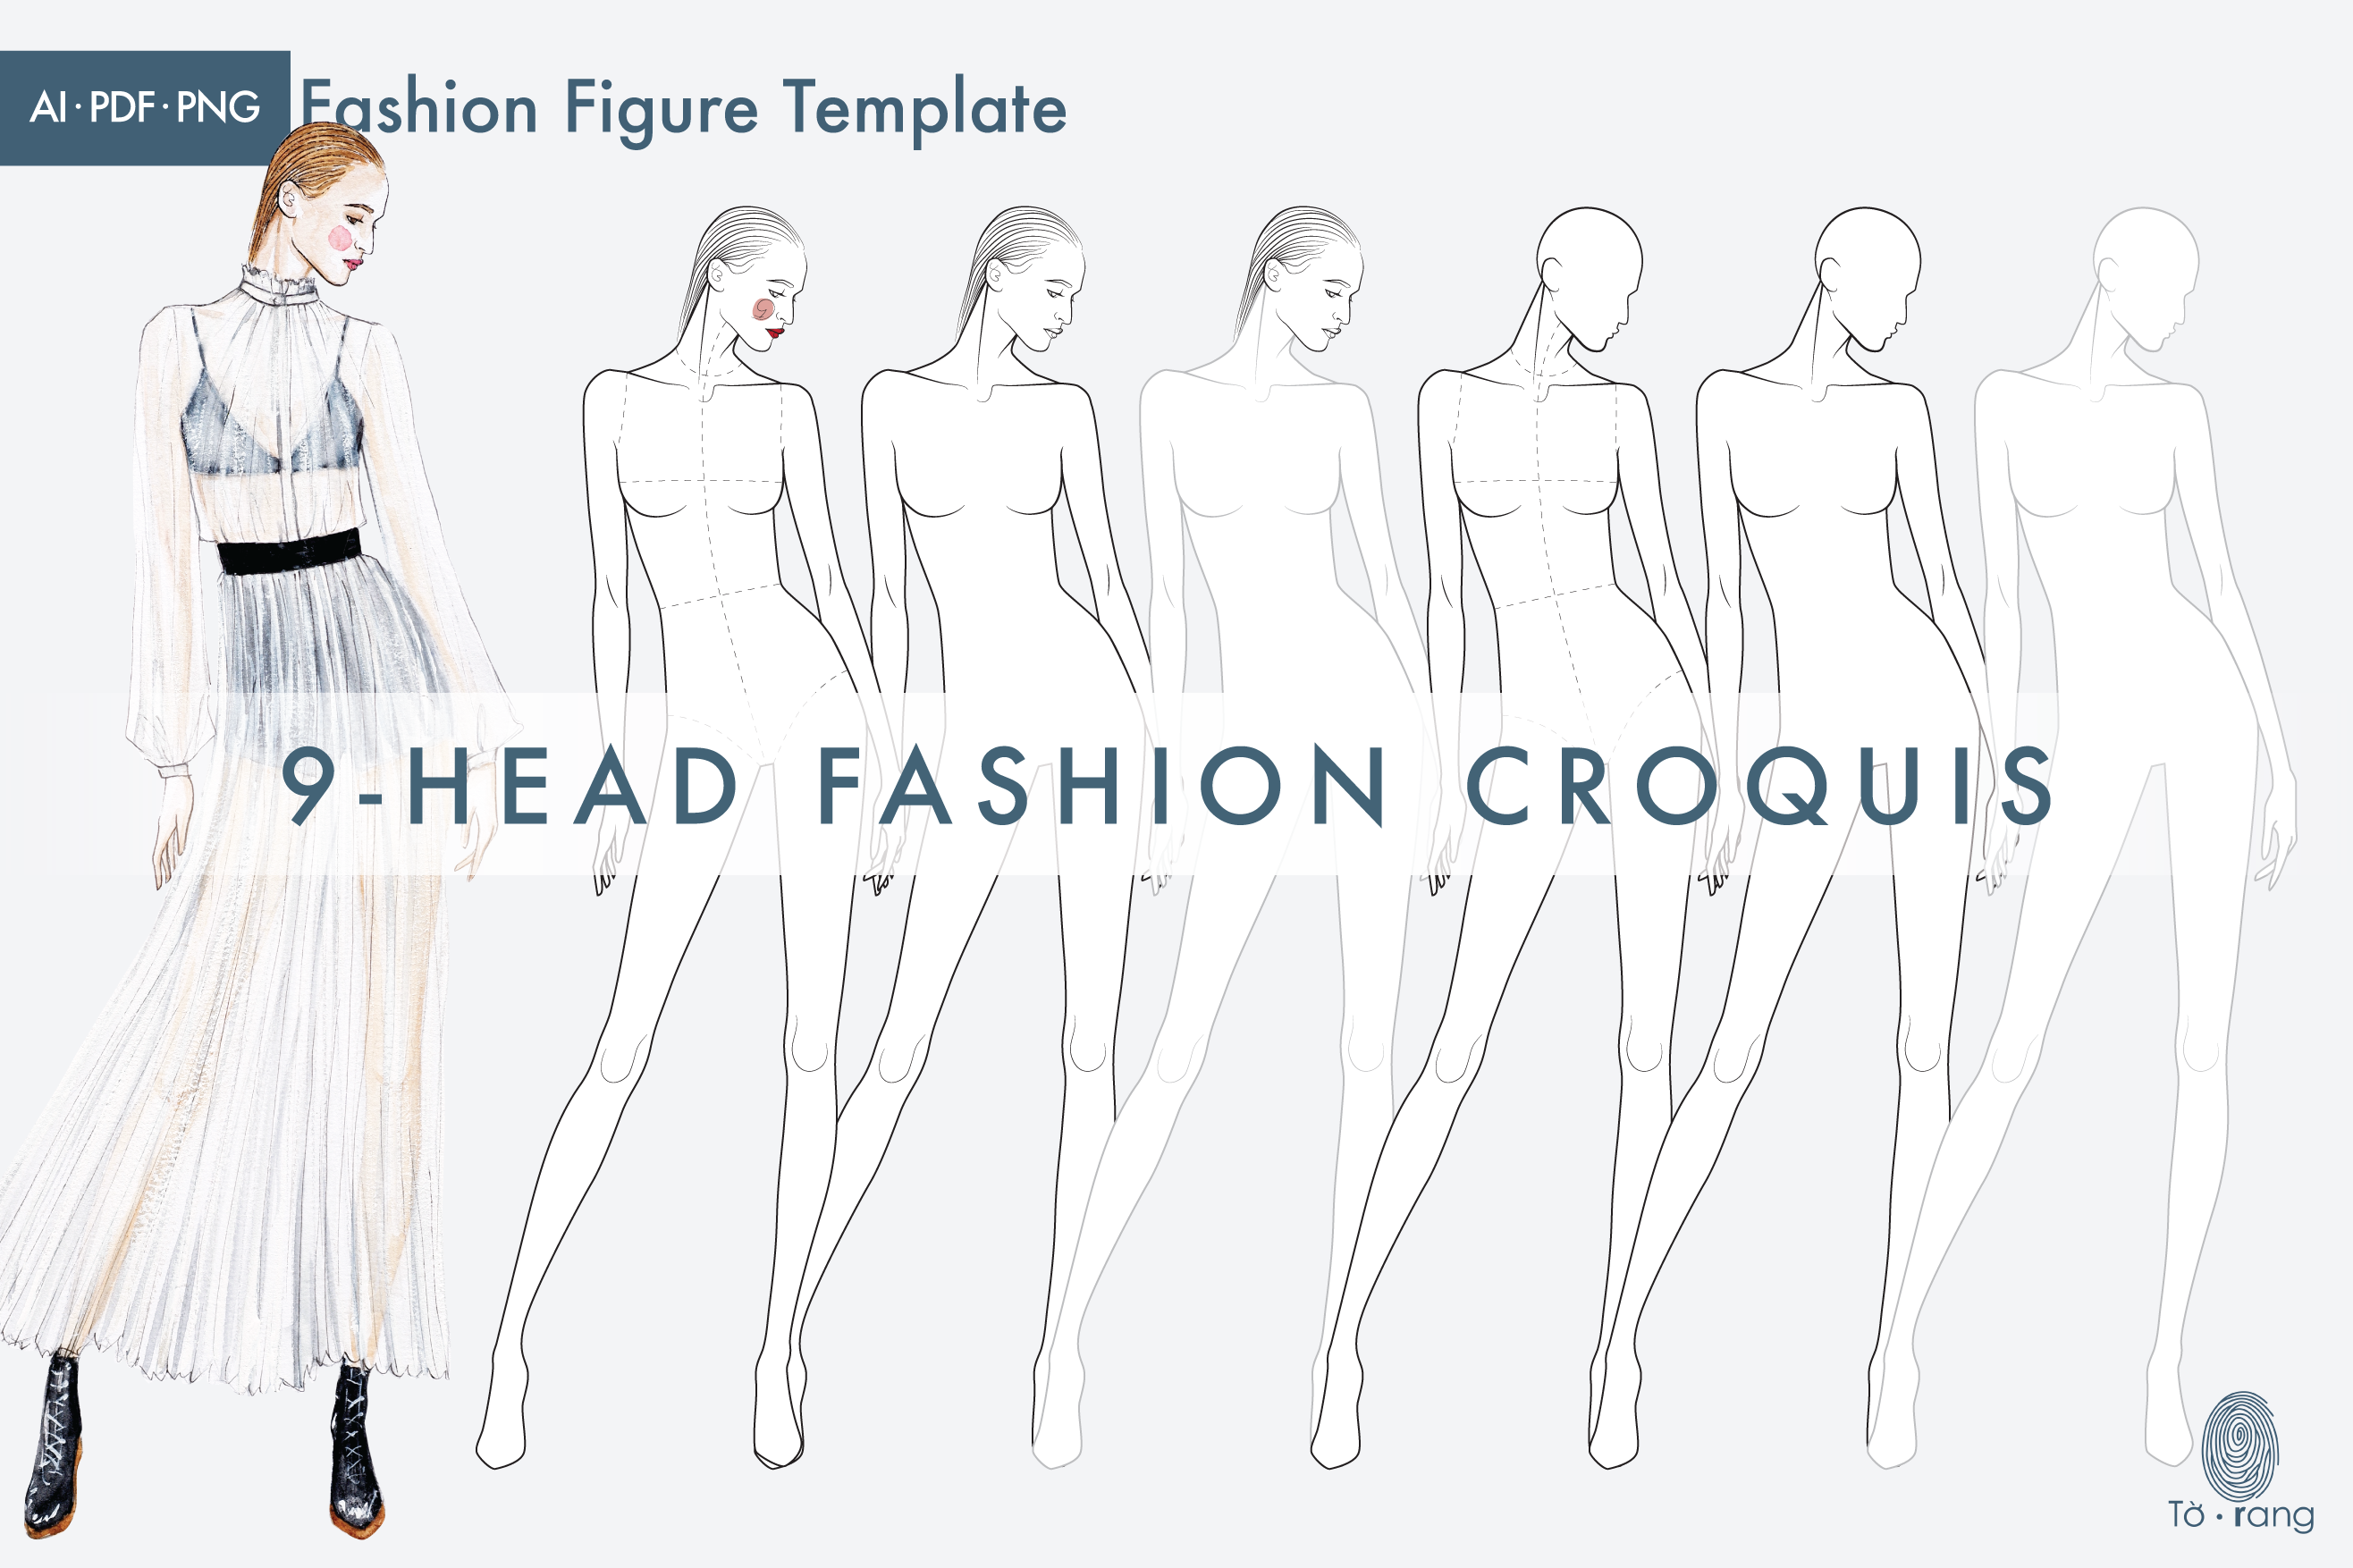 The Leg Flash Fashion Croqui